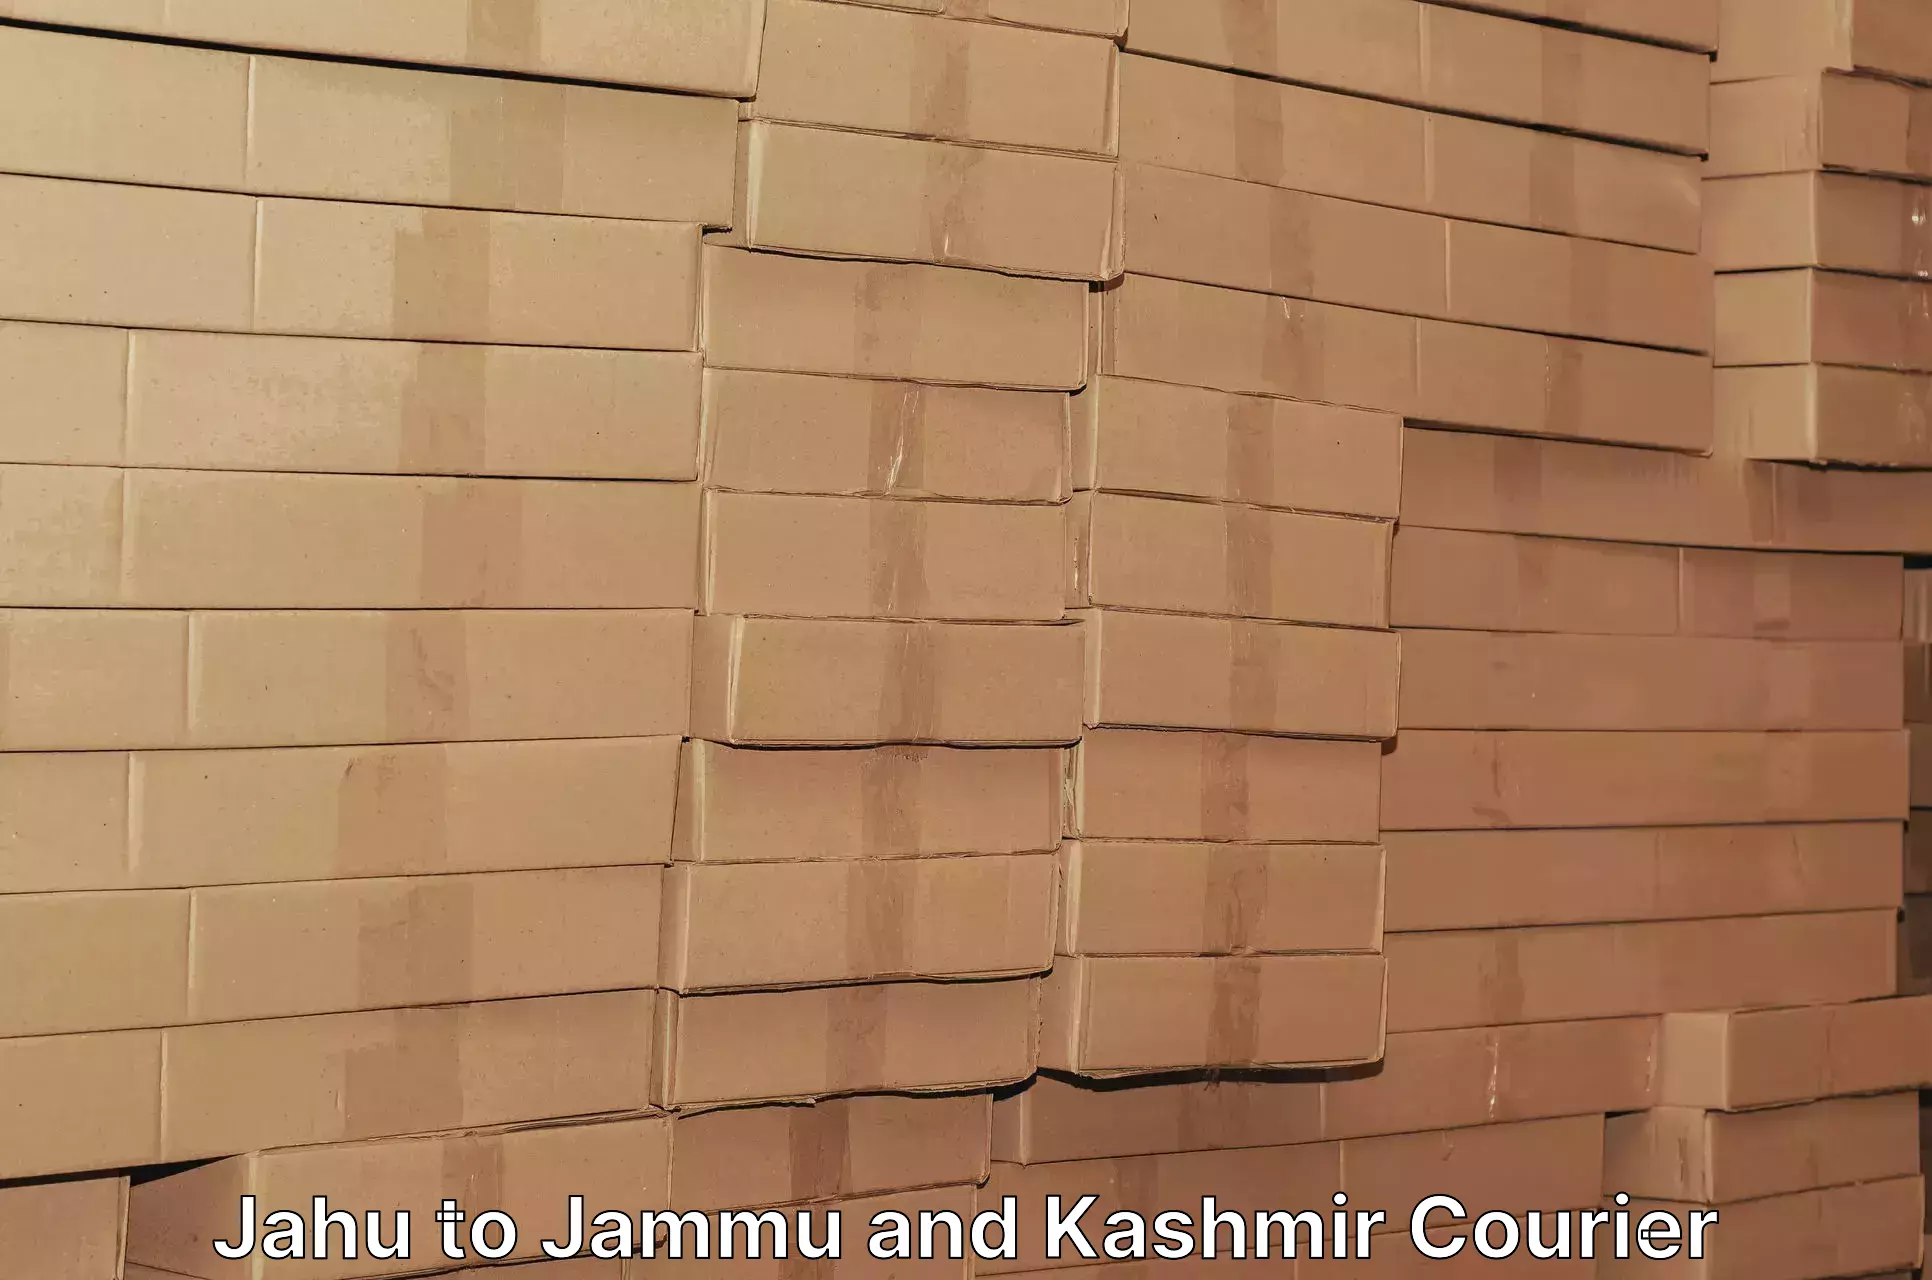 Urgent courier needs Jahu to Jammu and Kashmir